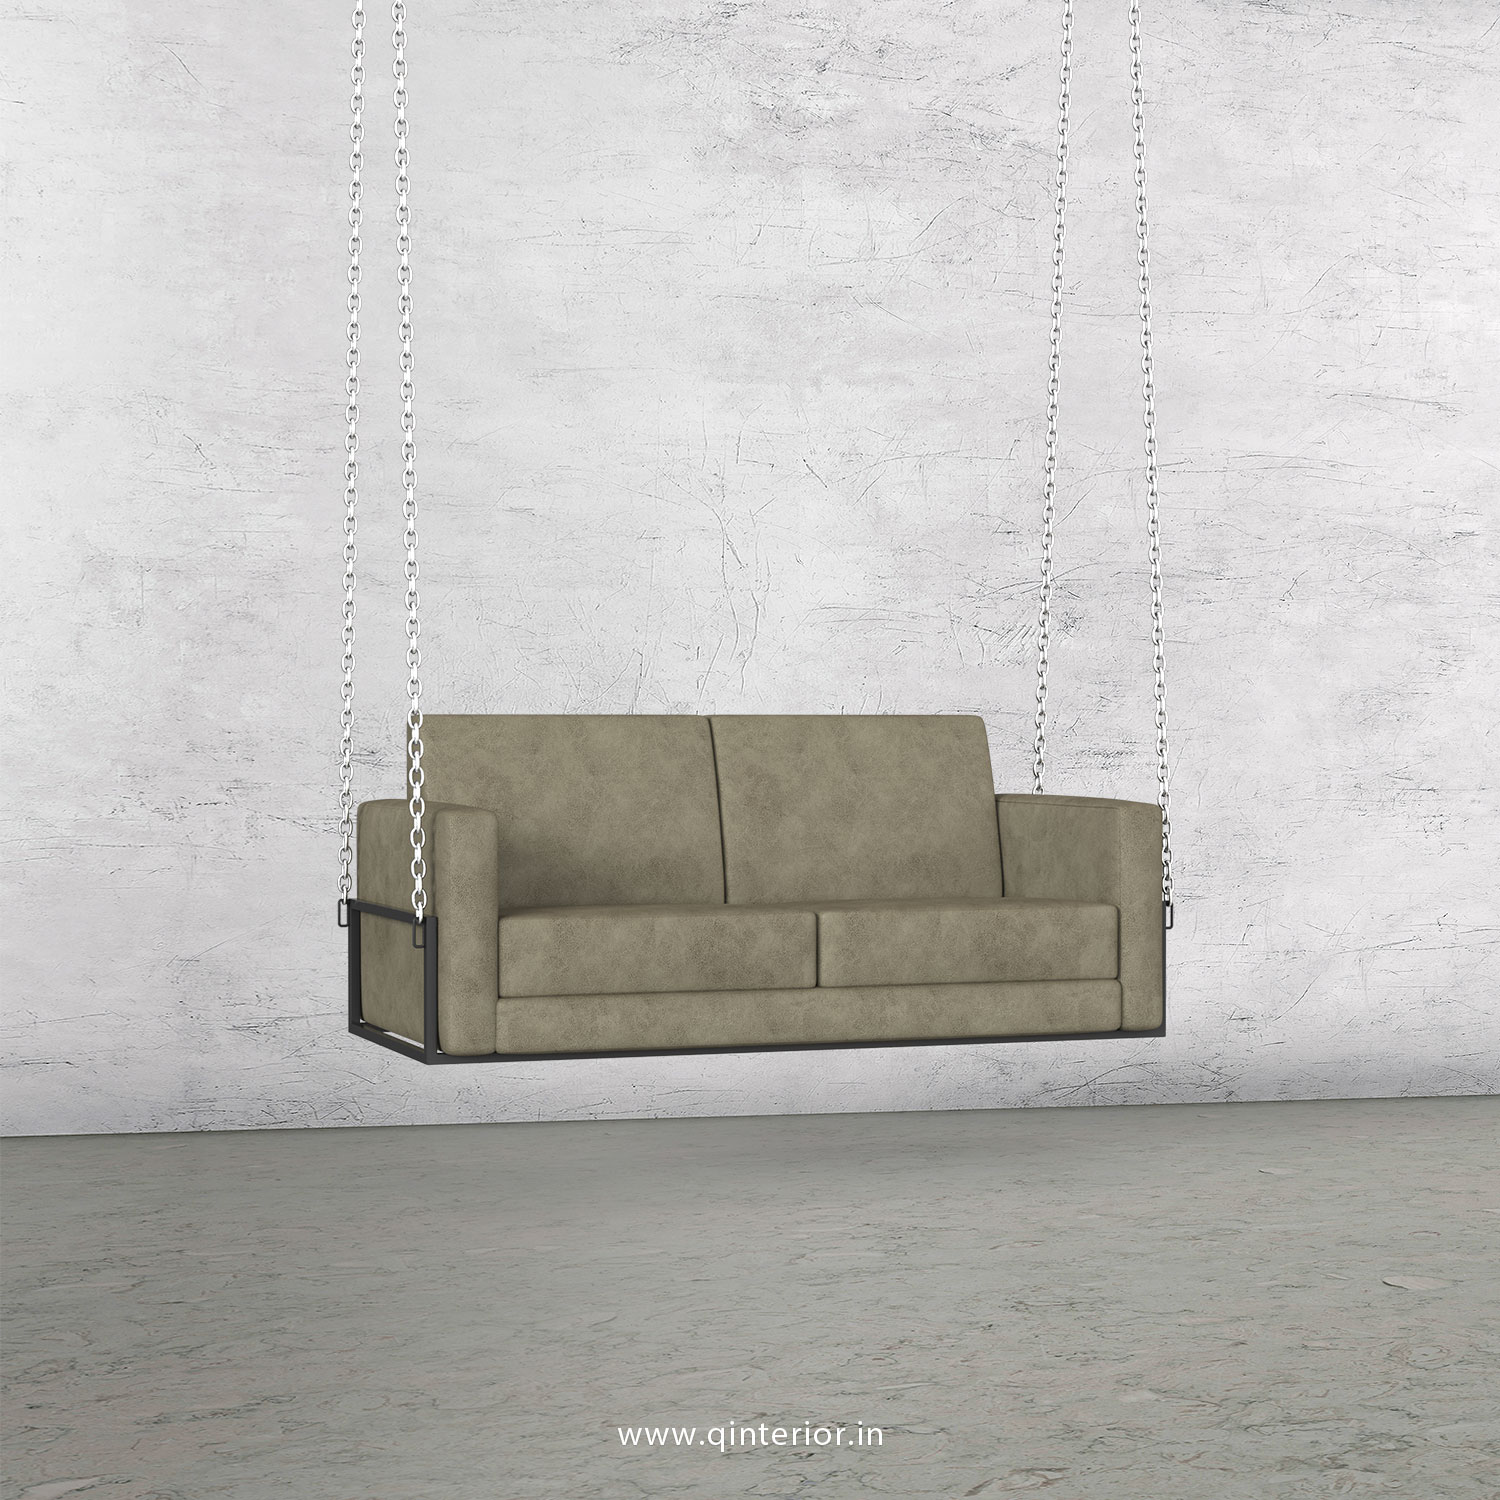 NIRVANA 2 Seater Swing Sofa in Fab Leather Fabric - SSF001 FL06